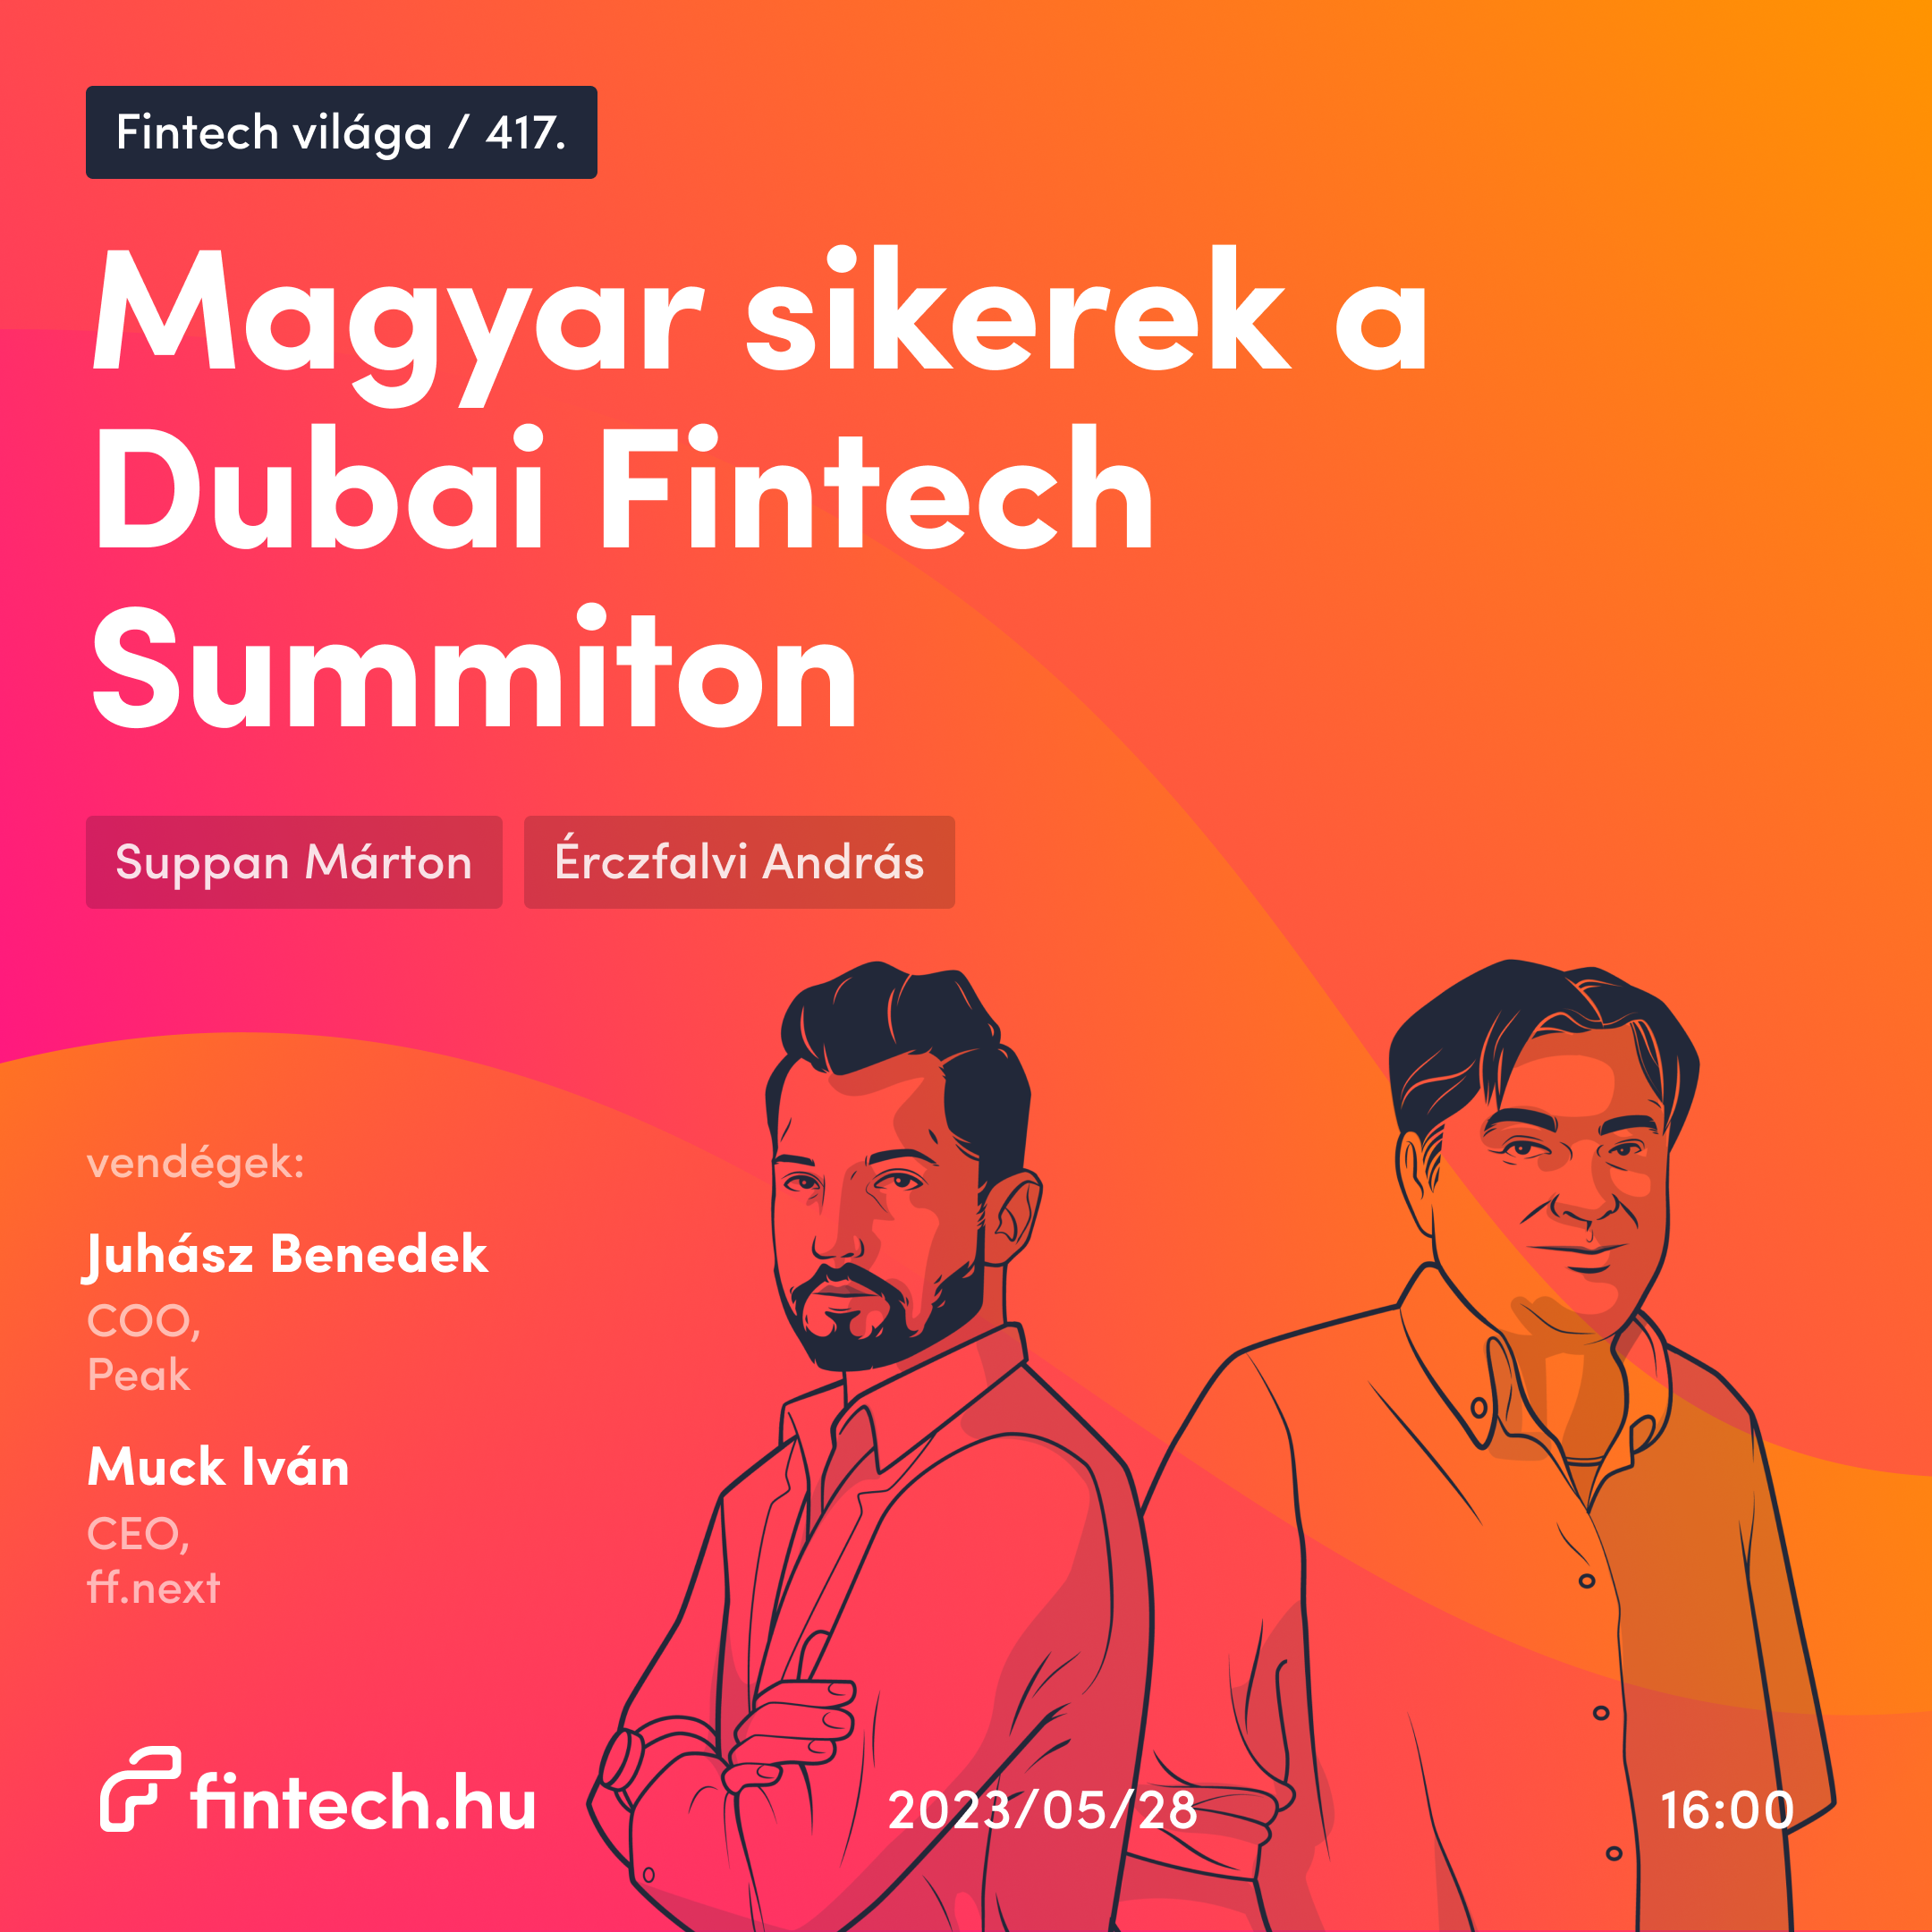 Magyar sikerek a Dubai Fintech Summiton